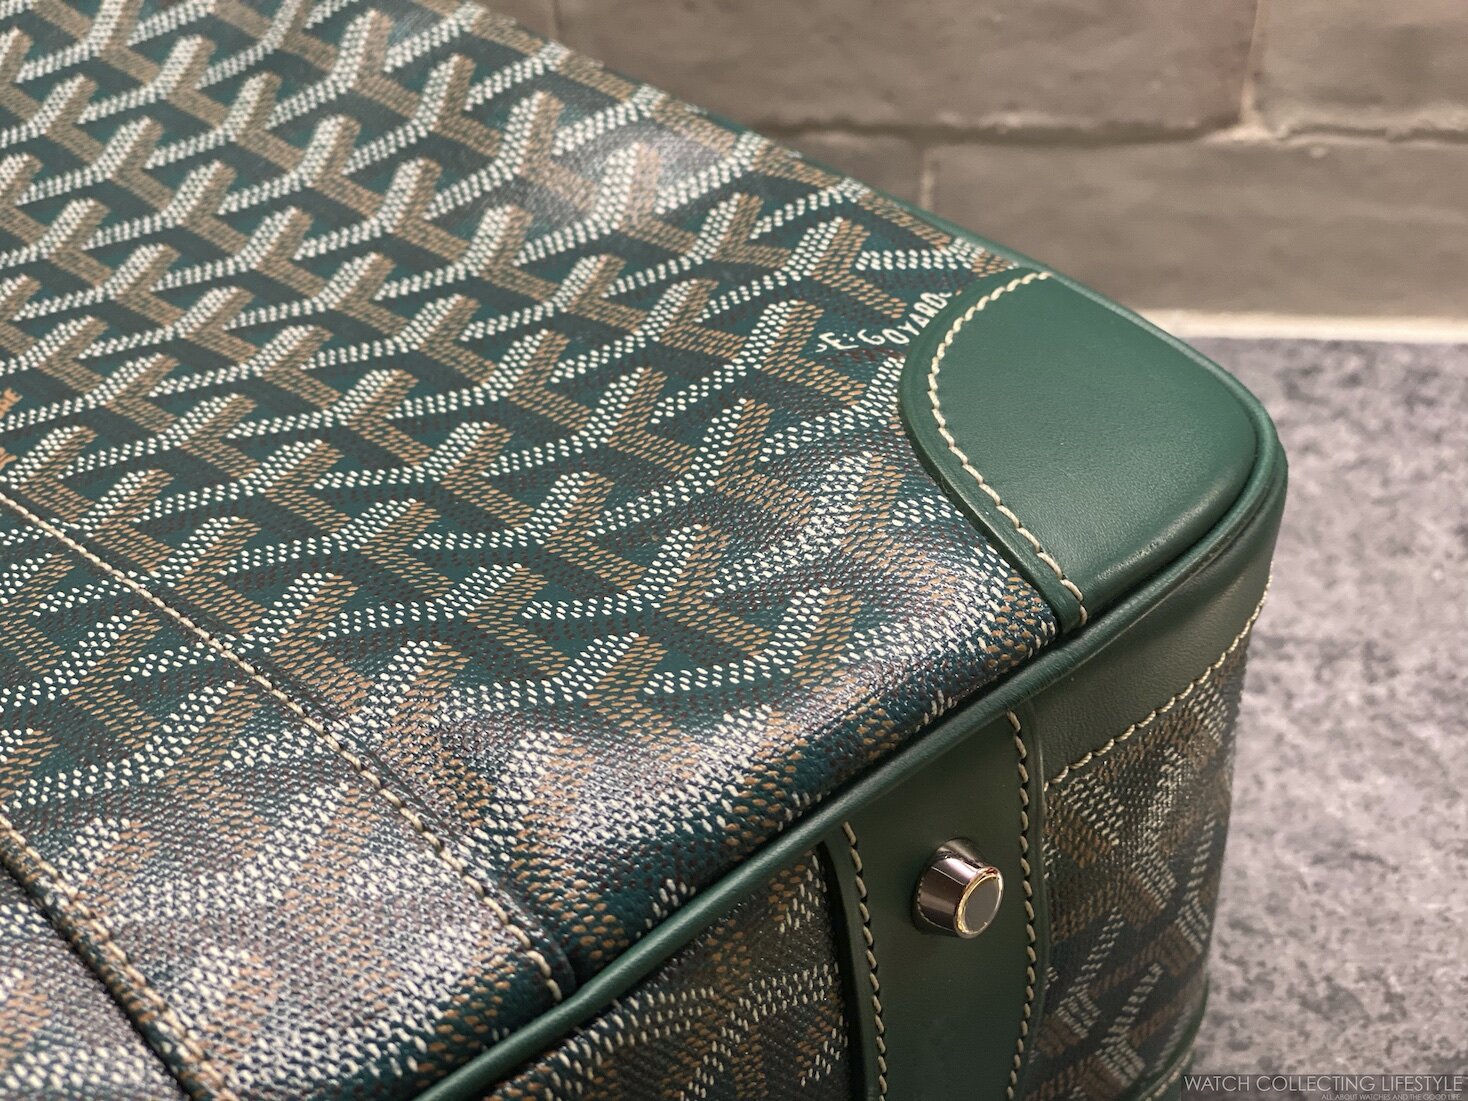 Super Gorgeous Briefcase that Works as an Everyday Bag - Goyard